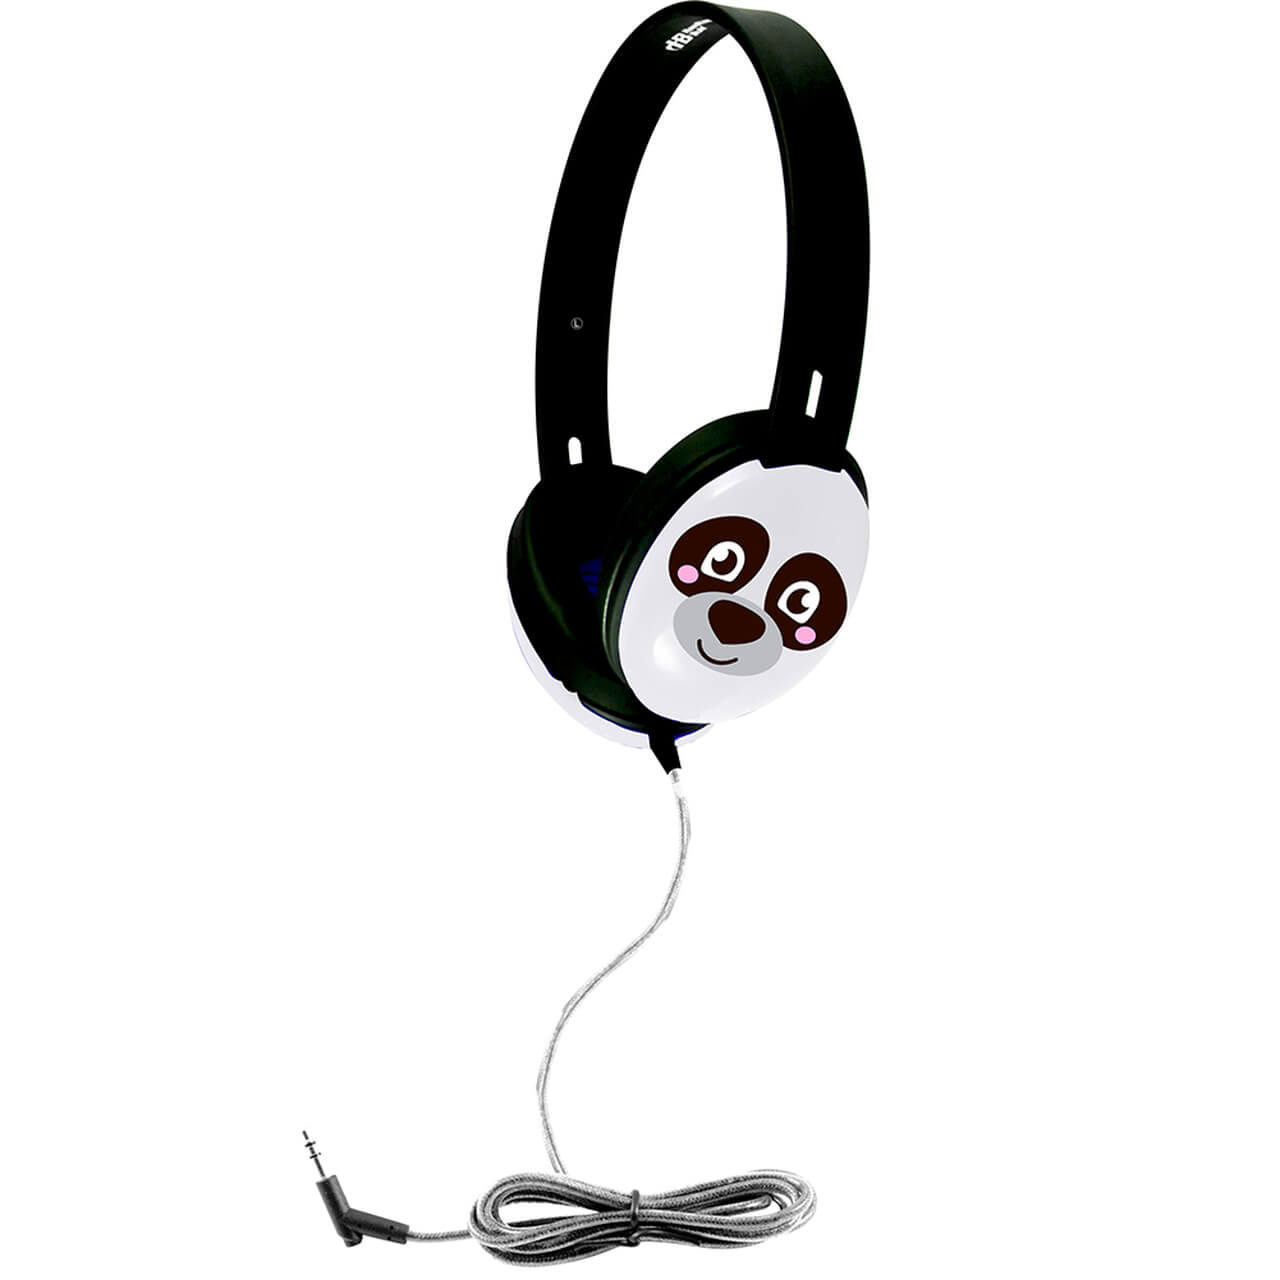 Primo™ Series "Panda" Stereo Headphones